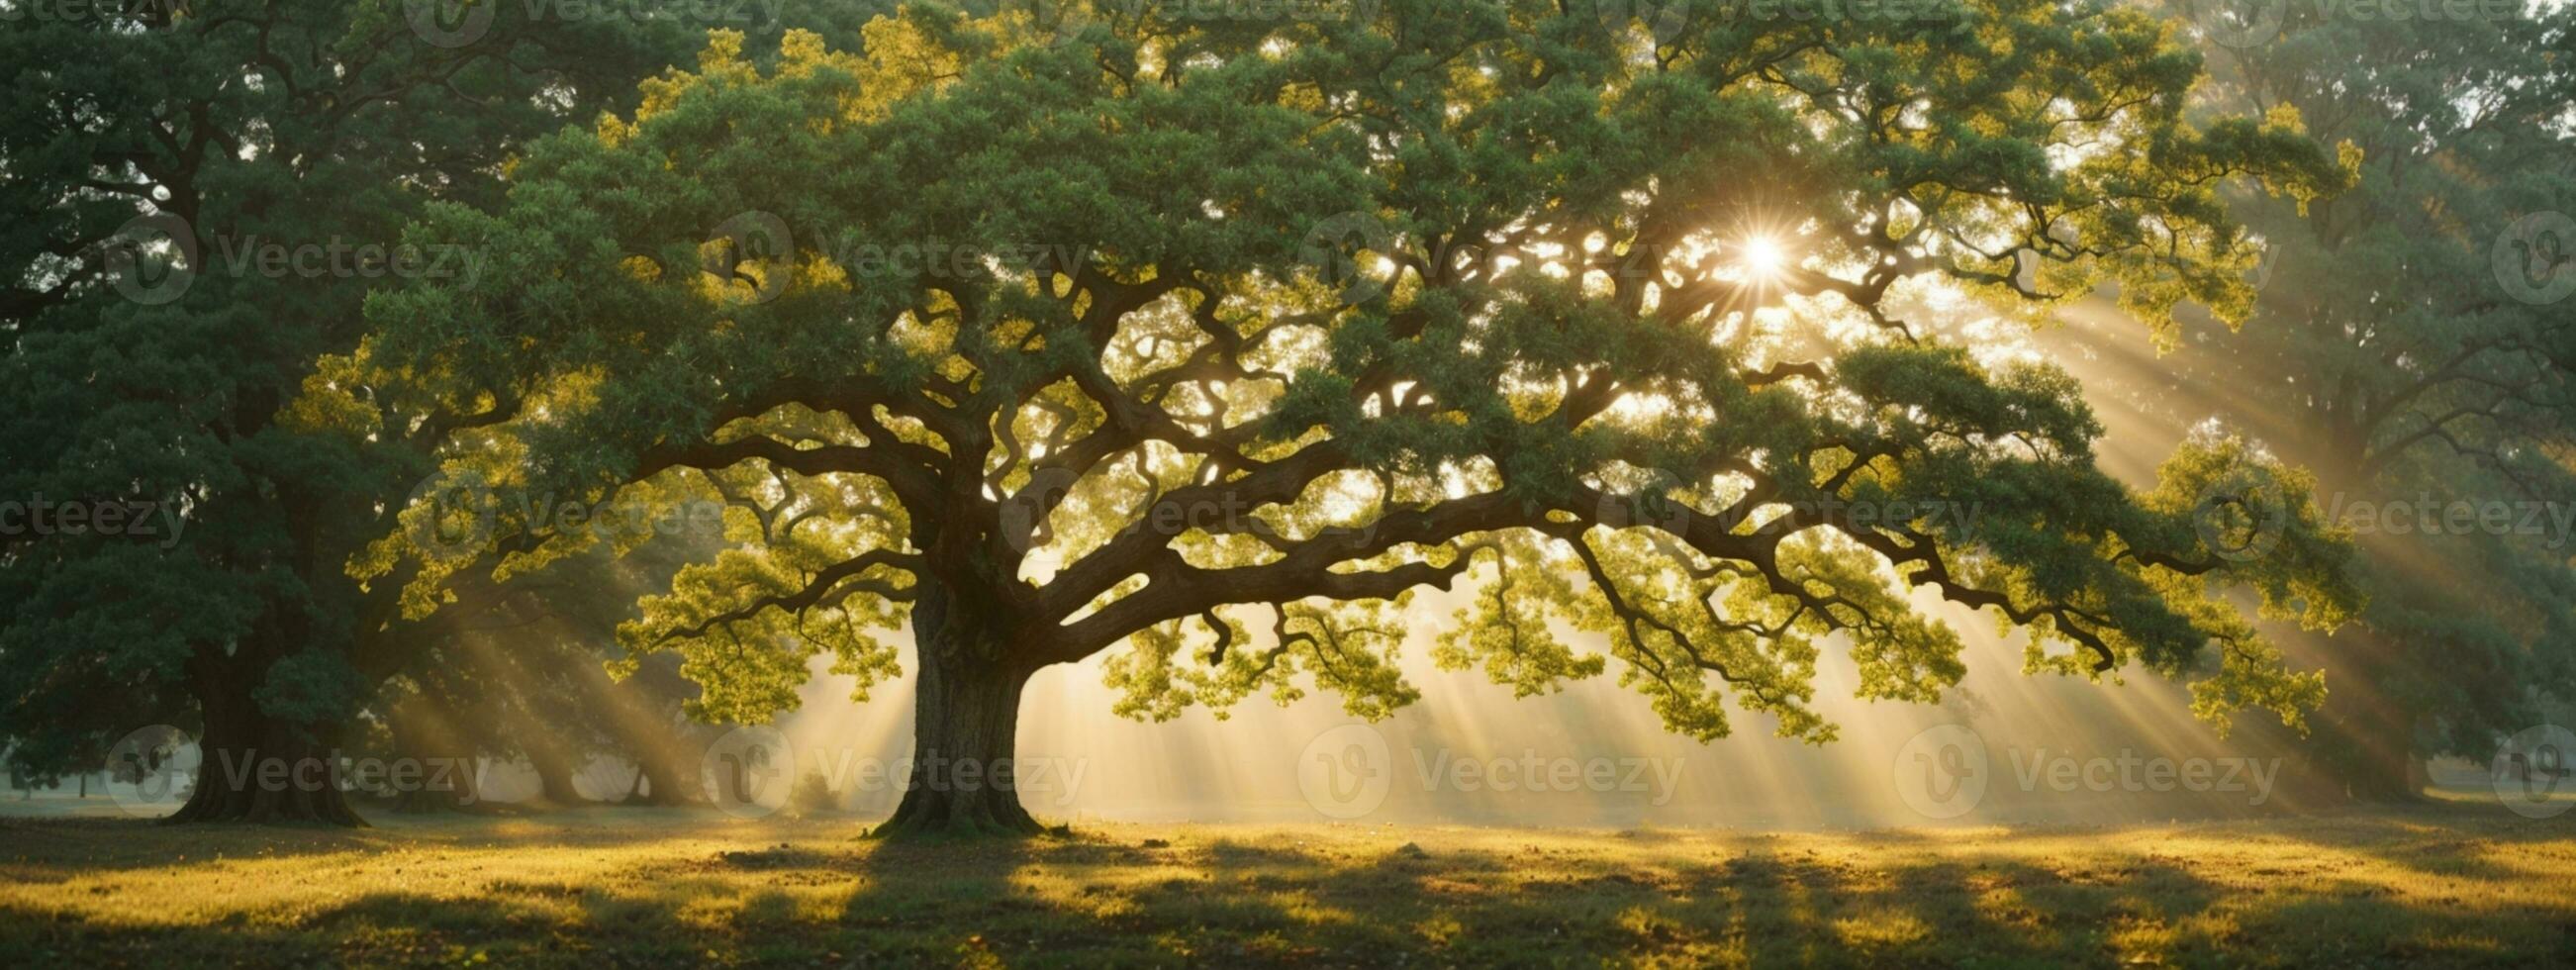 oud eik boom gebladerte in ochtend- licht met zonlicht. ai gegenereerd foto